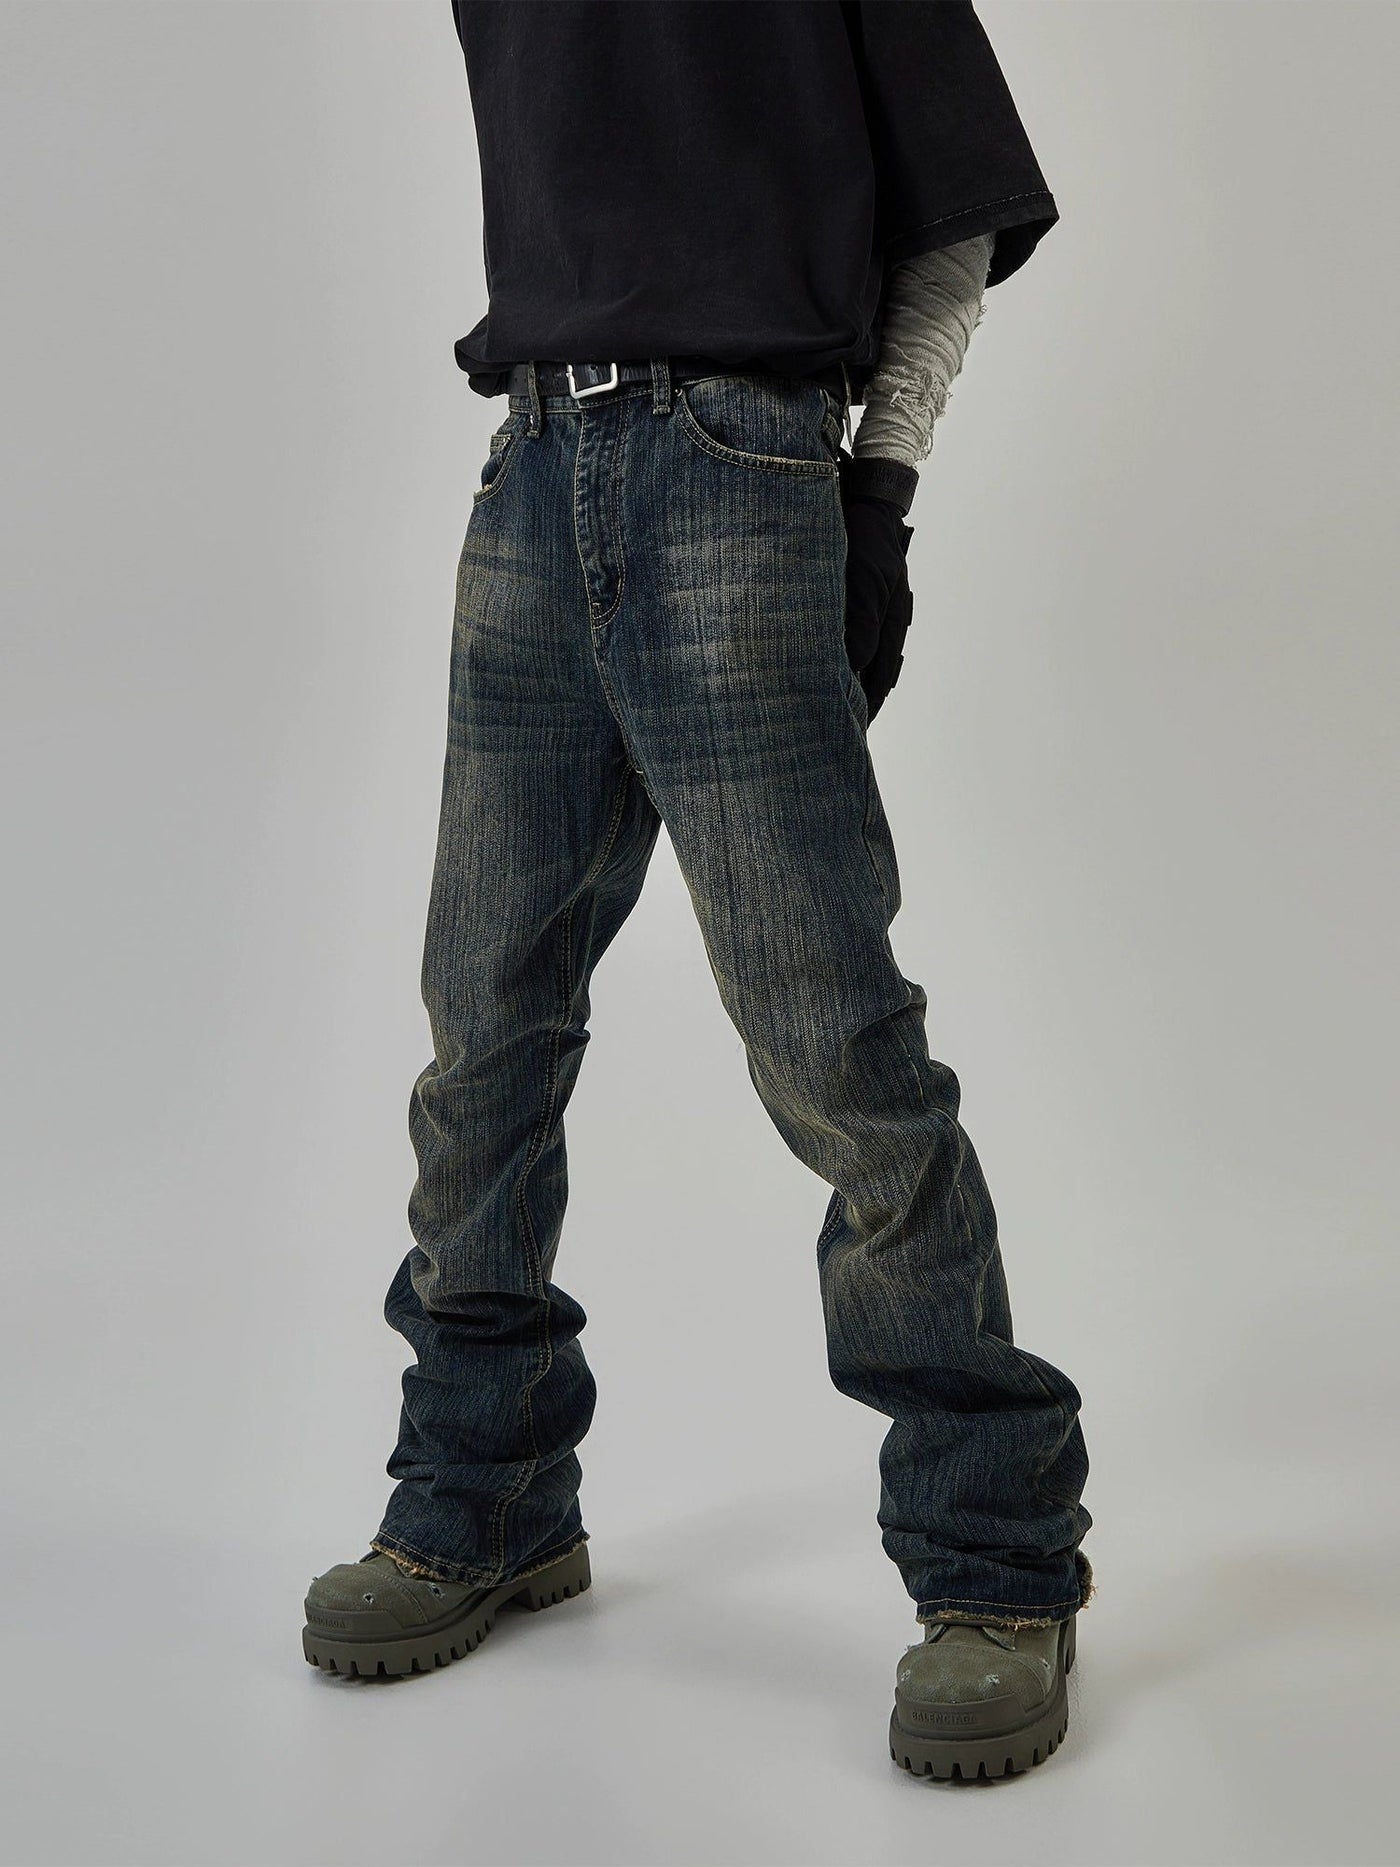 Frayed Edges Slim Fit Jeans Korean Street Fashion Jeans By Ash Dark Shop Online at OH Vault